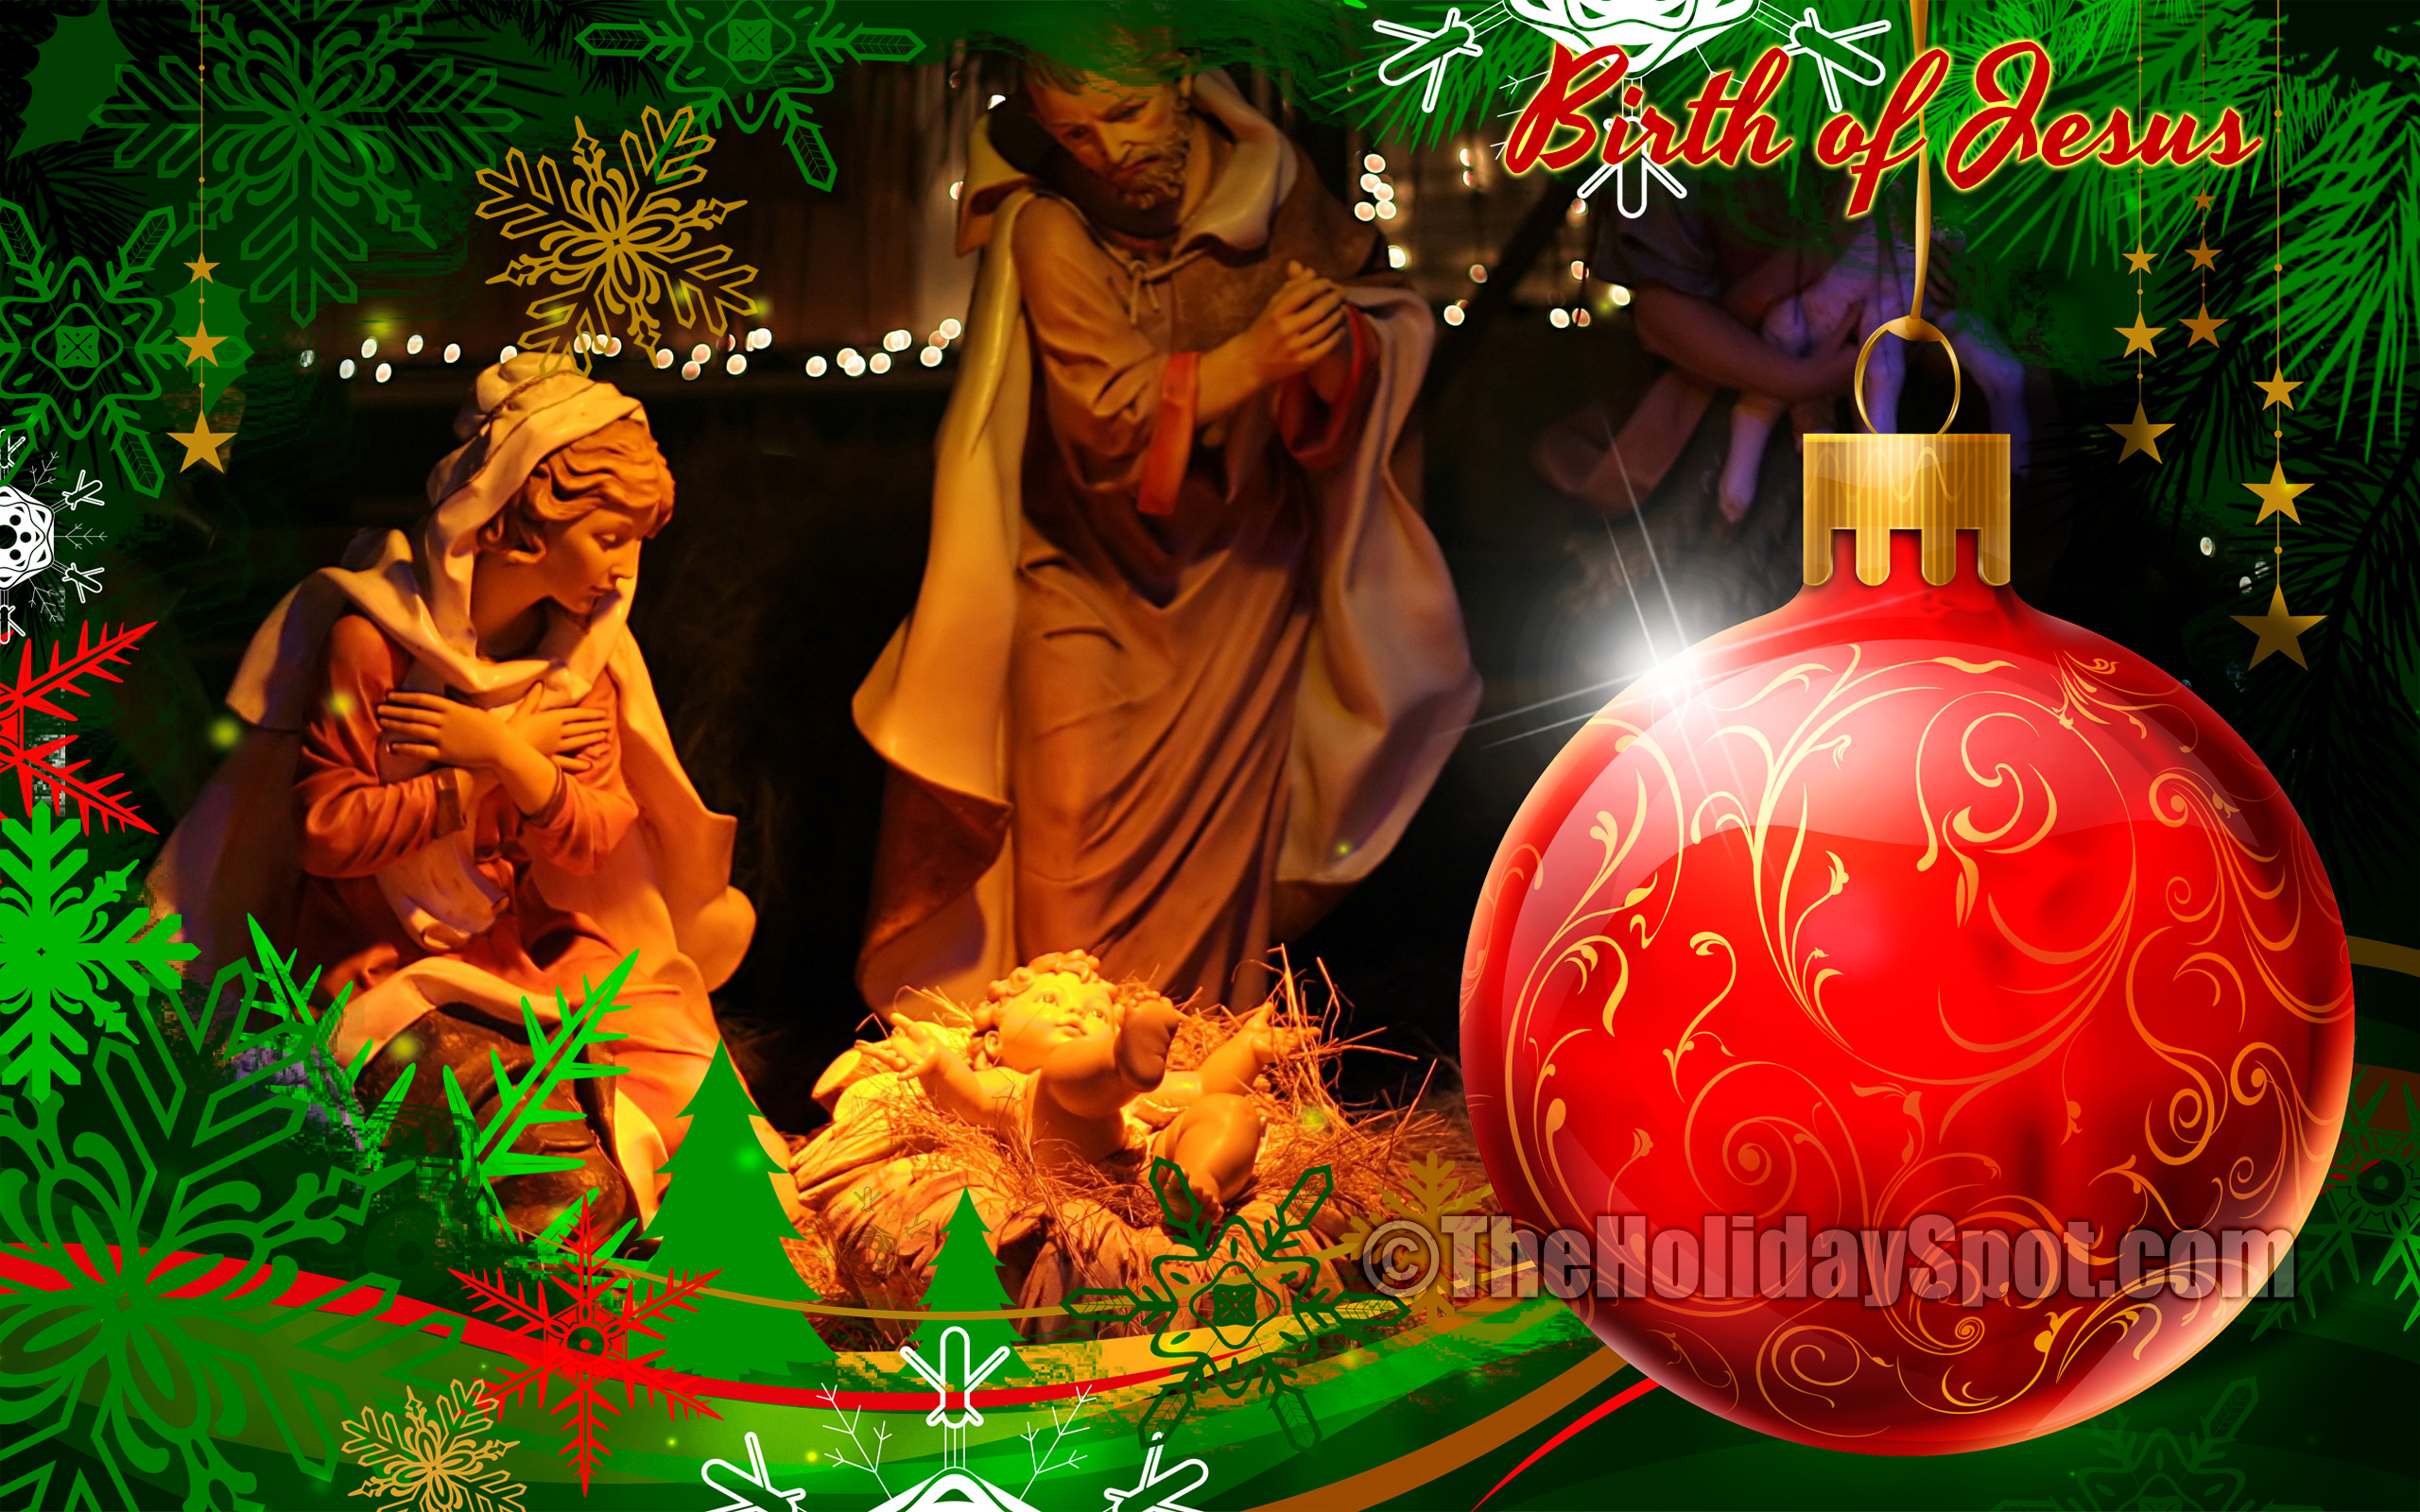 Merry Christmas Jesus BirtHDay Ing Gallery